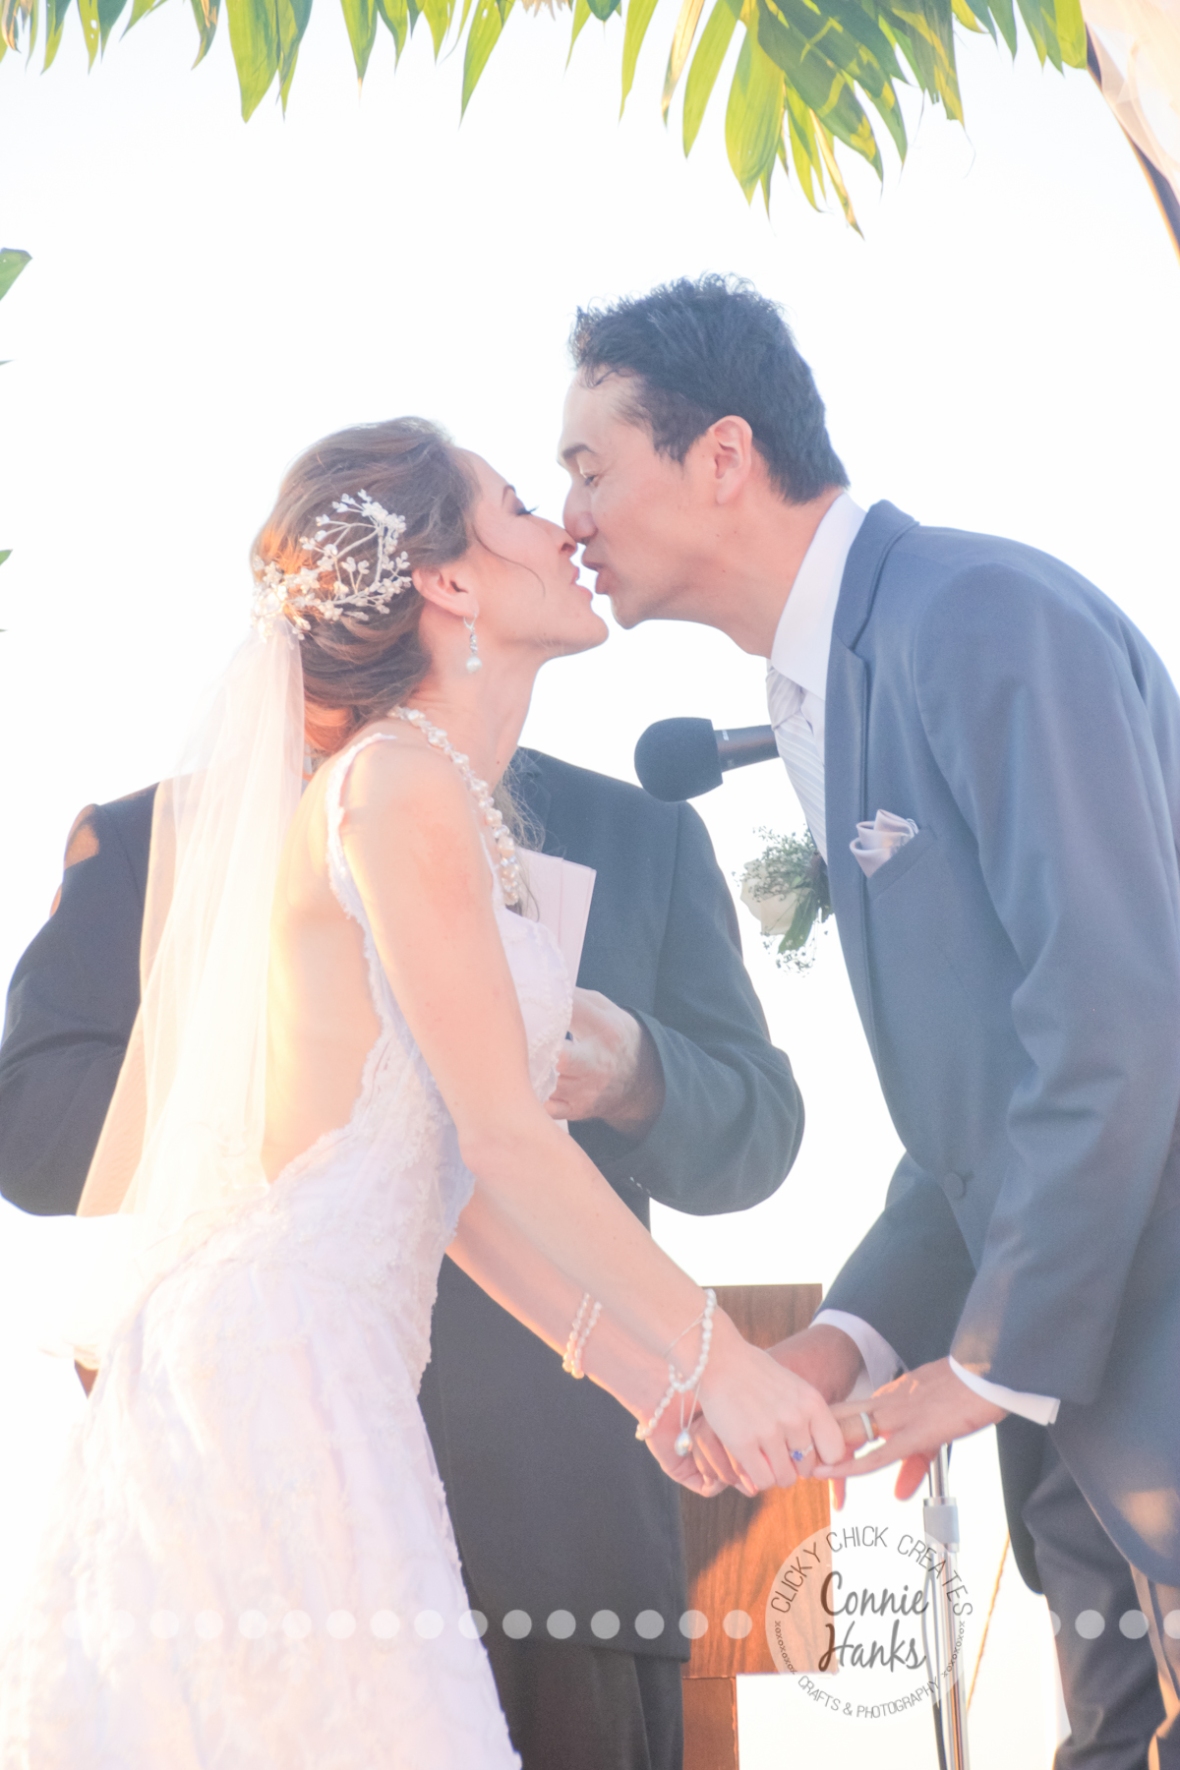 Connie Hanks Photography // ClickyChickCreates.com // Baja wedding, pink, turquoise, head wreath, cake, roses, lanterns, toast, kids, flower girls, ring bearers, 